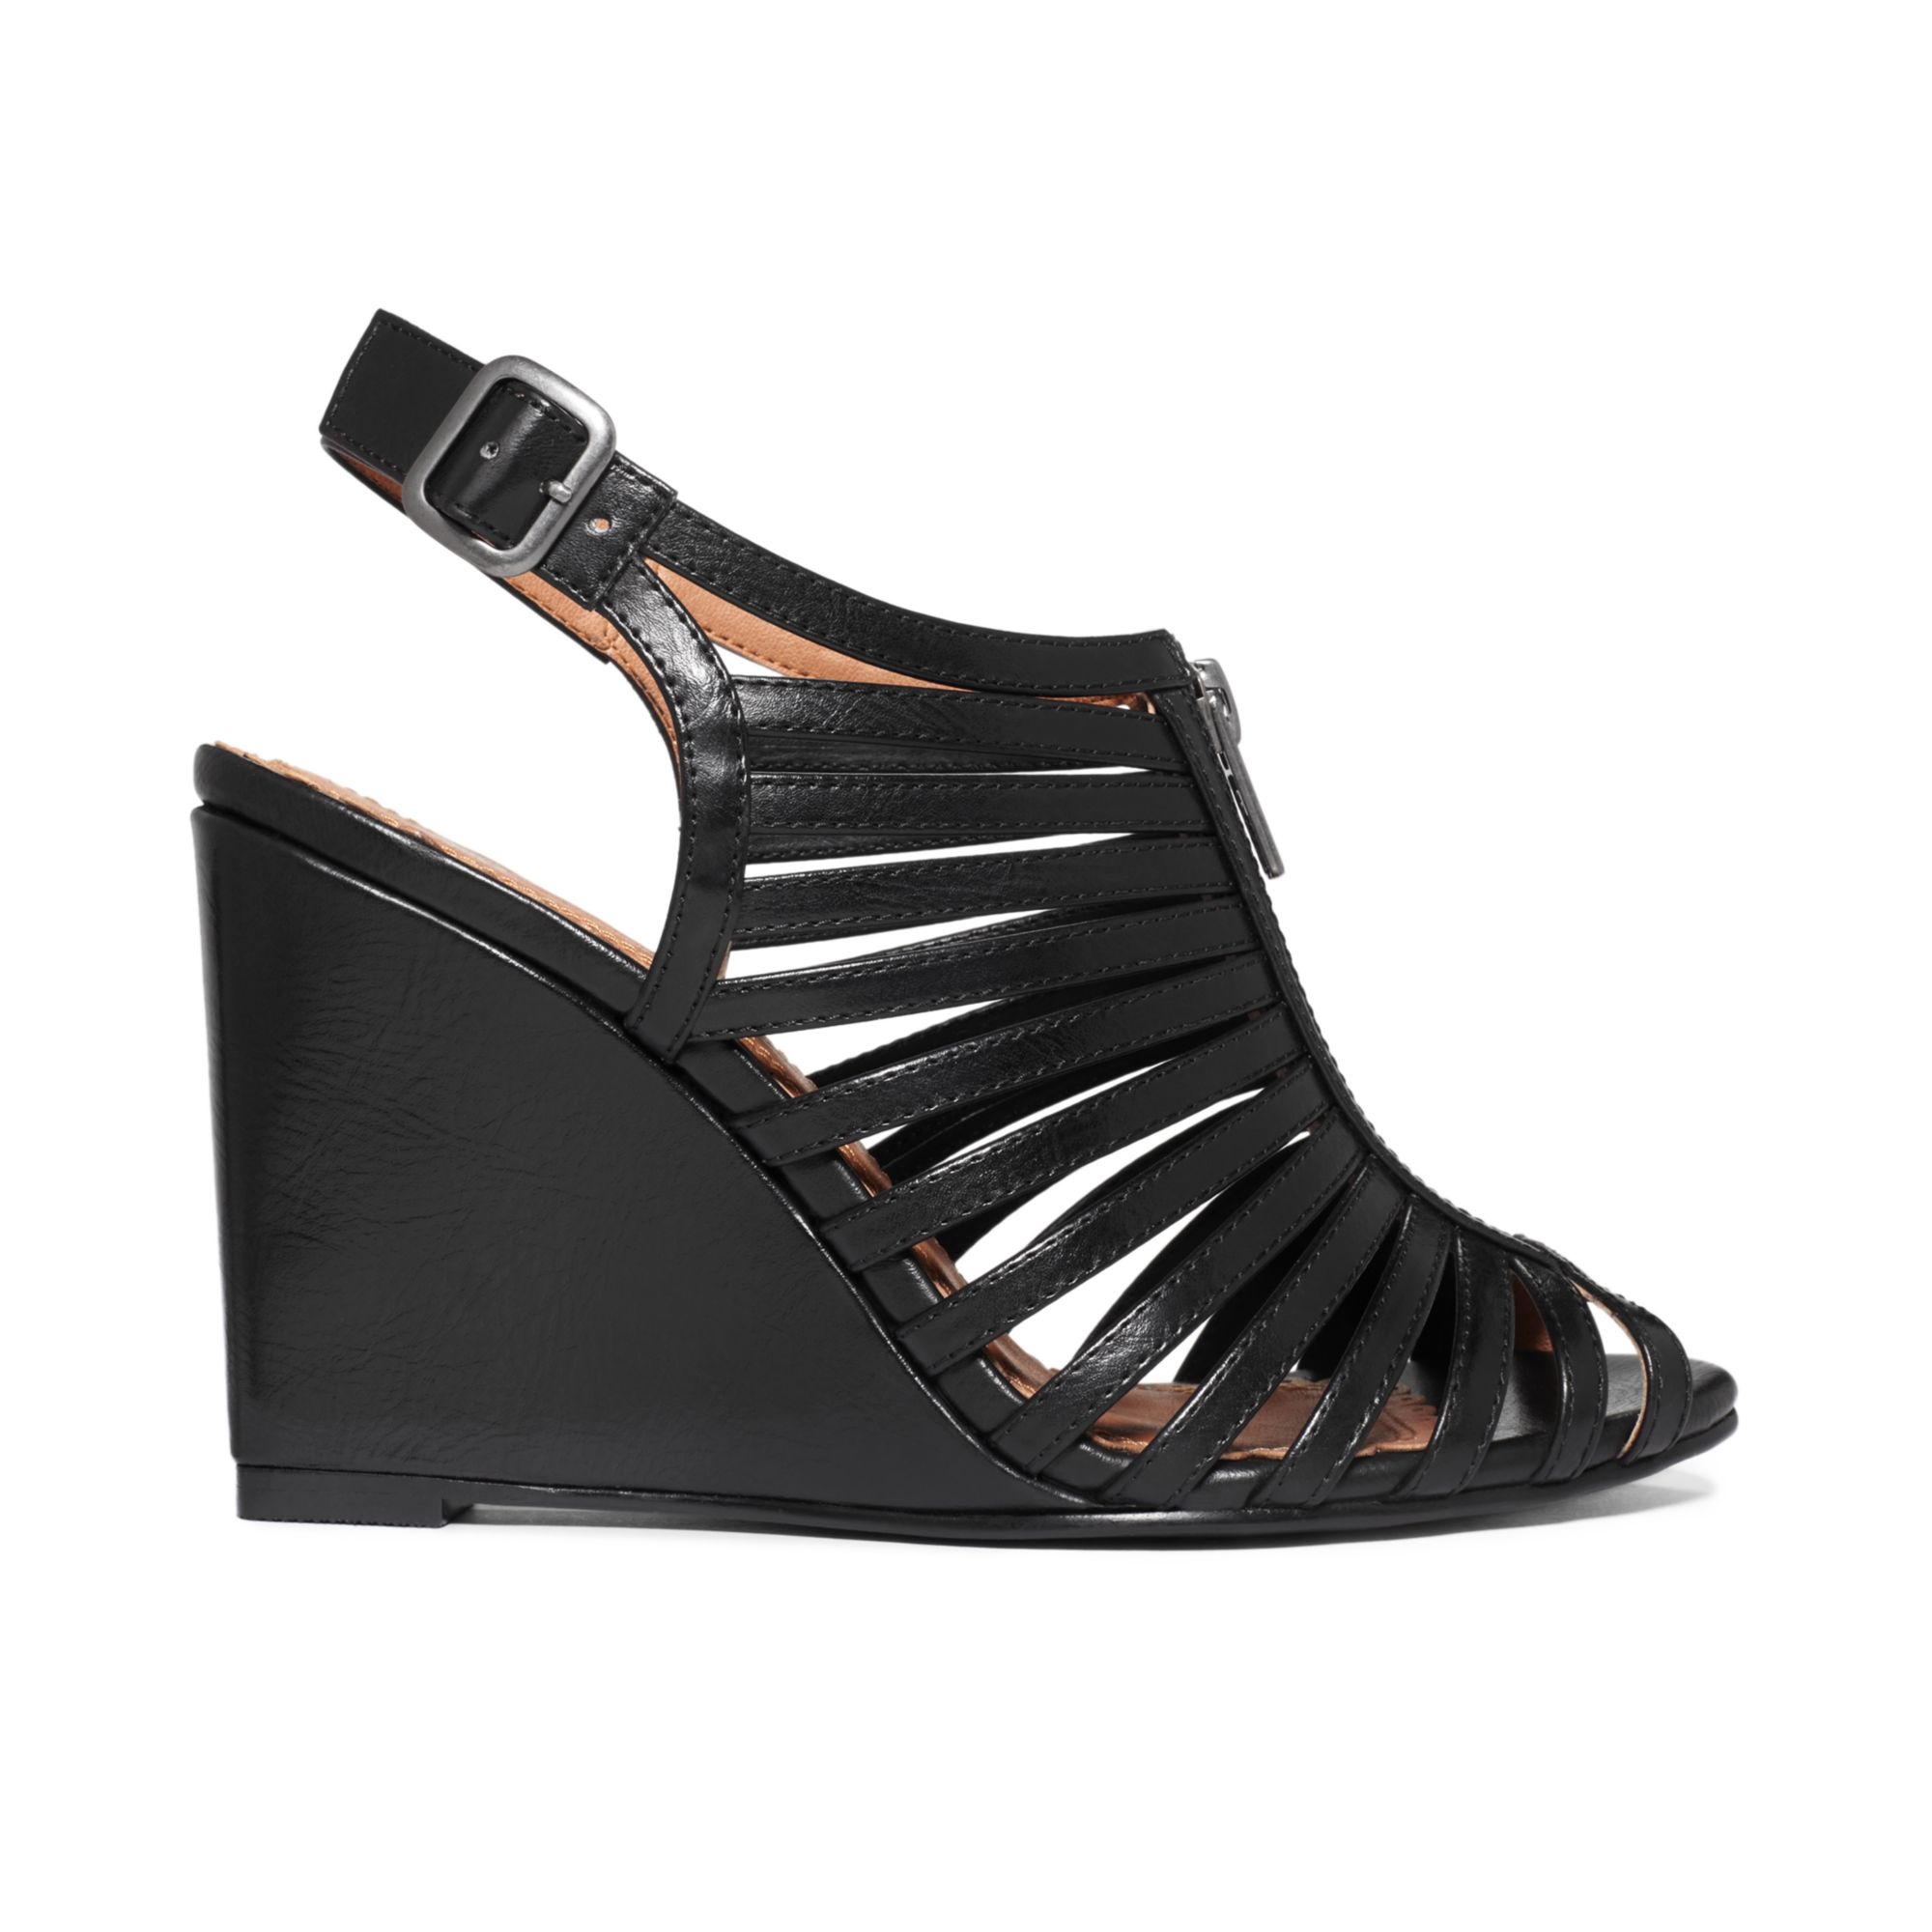 Lyst - Rampage Caligo Zip Up Wedge Sandals in Black